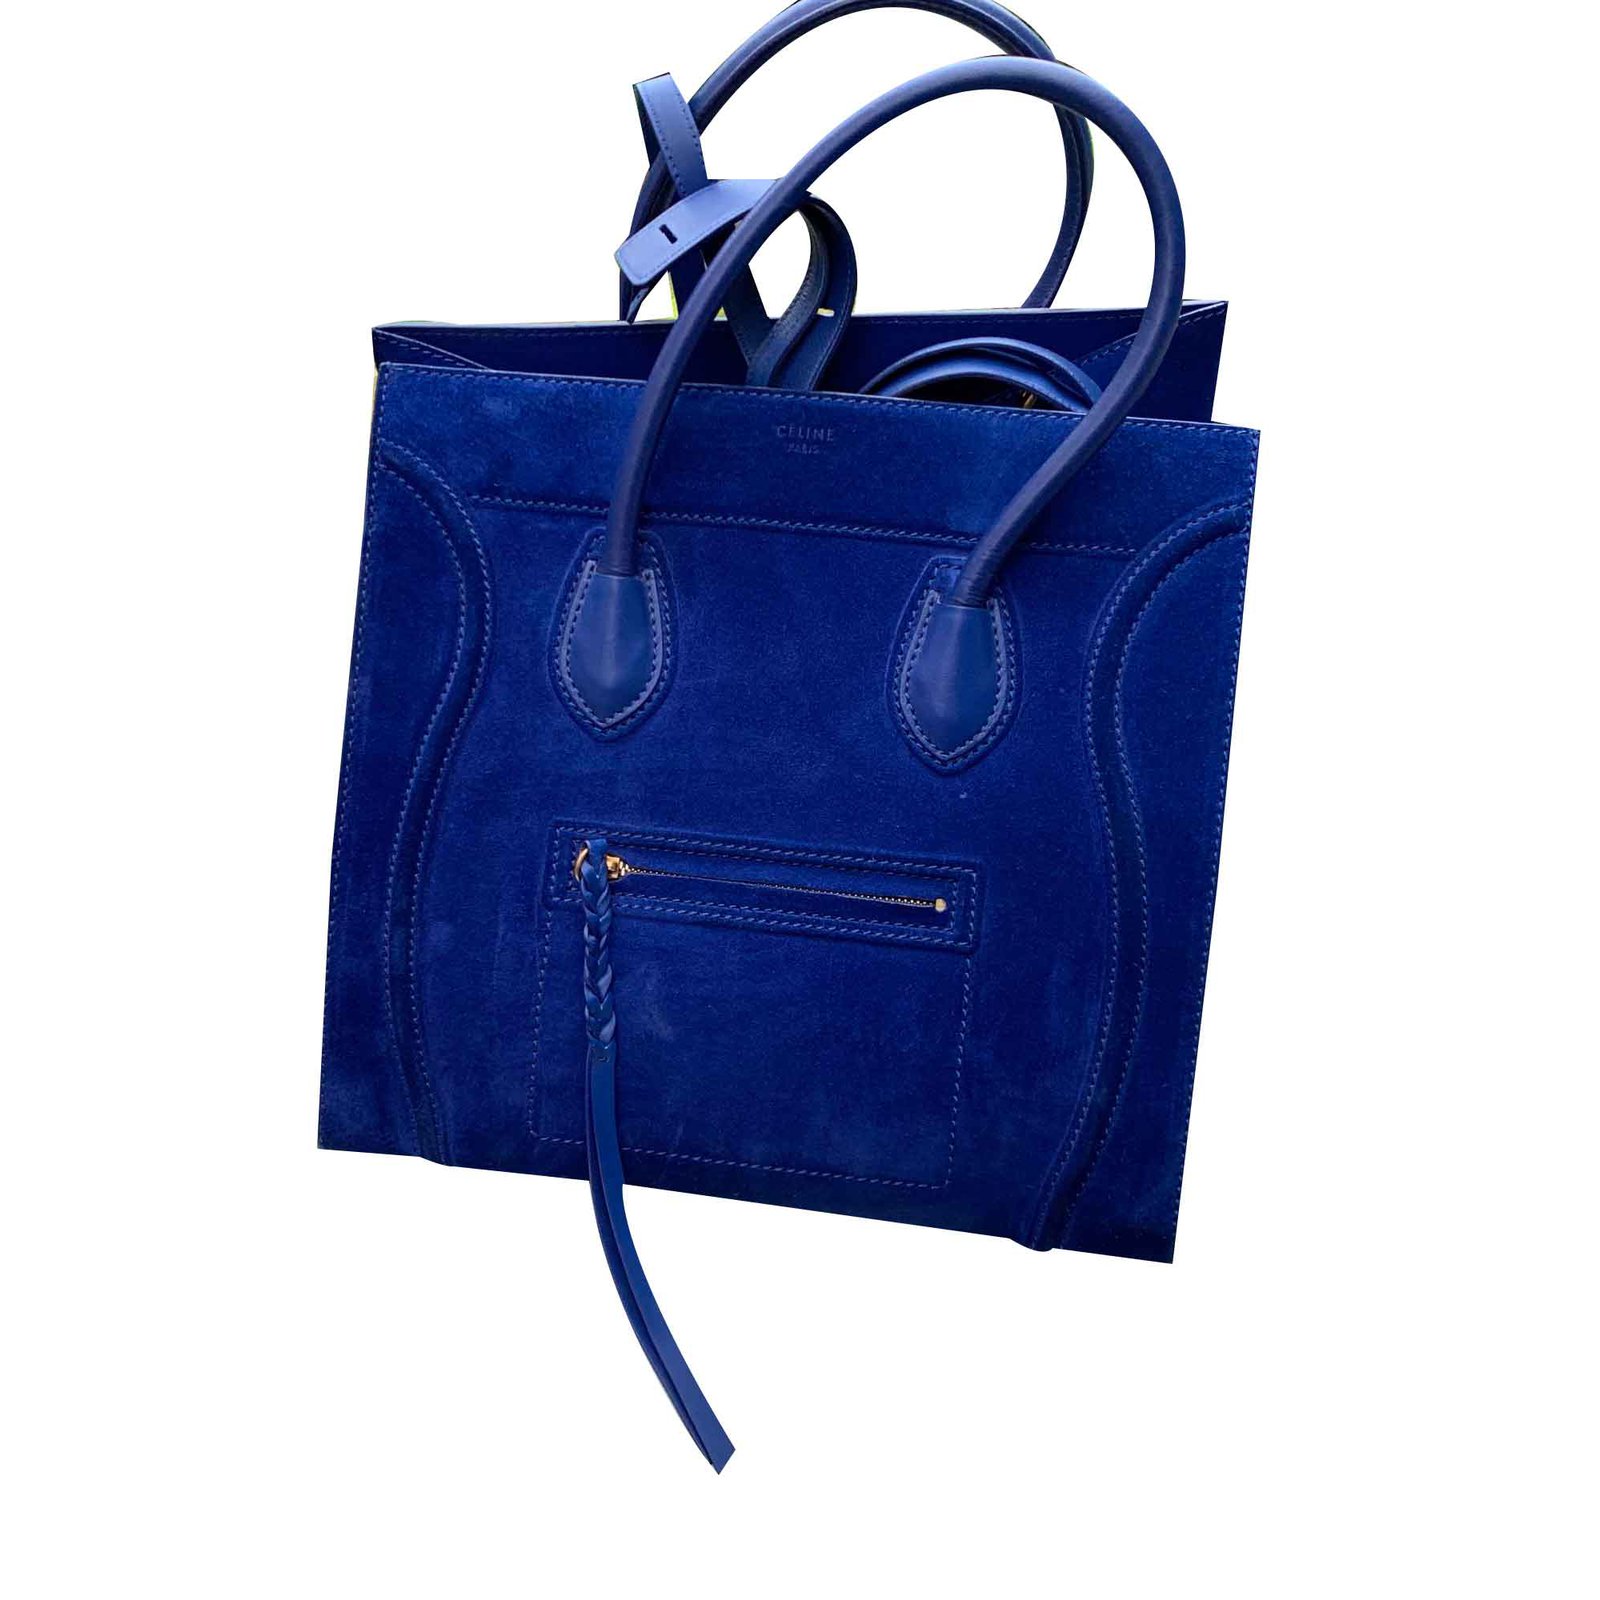 Blue Suede Handbags Top Sellers, 57% OFF | www.ingeniovirtual.com